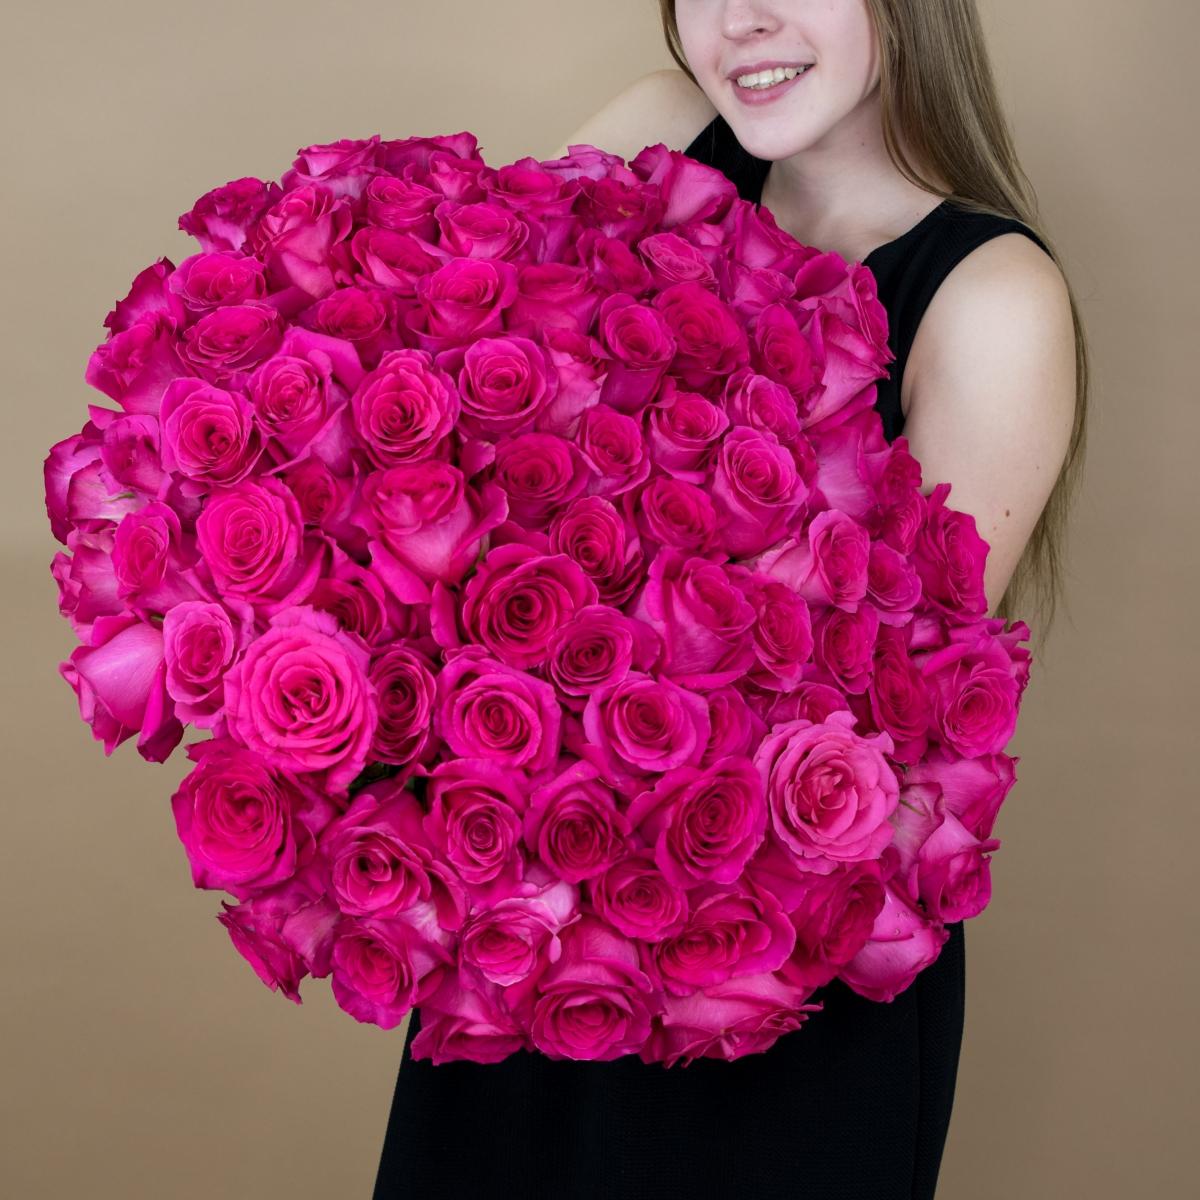 Букет из розовых роз 75 шт. (40 см) (артикул букета  11319tlt)